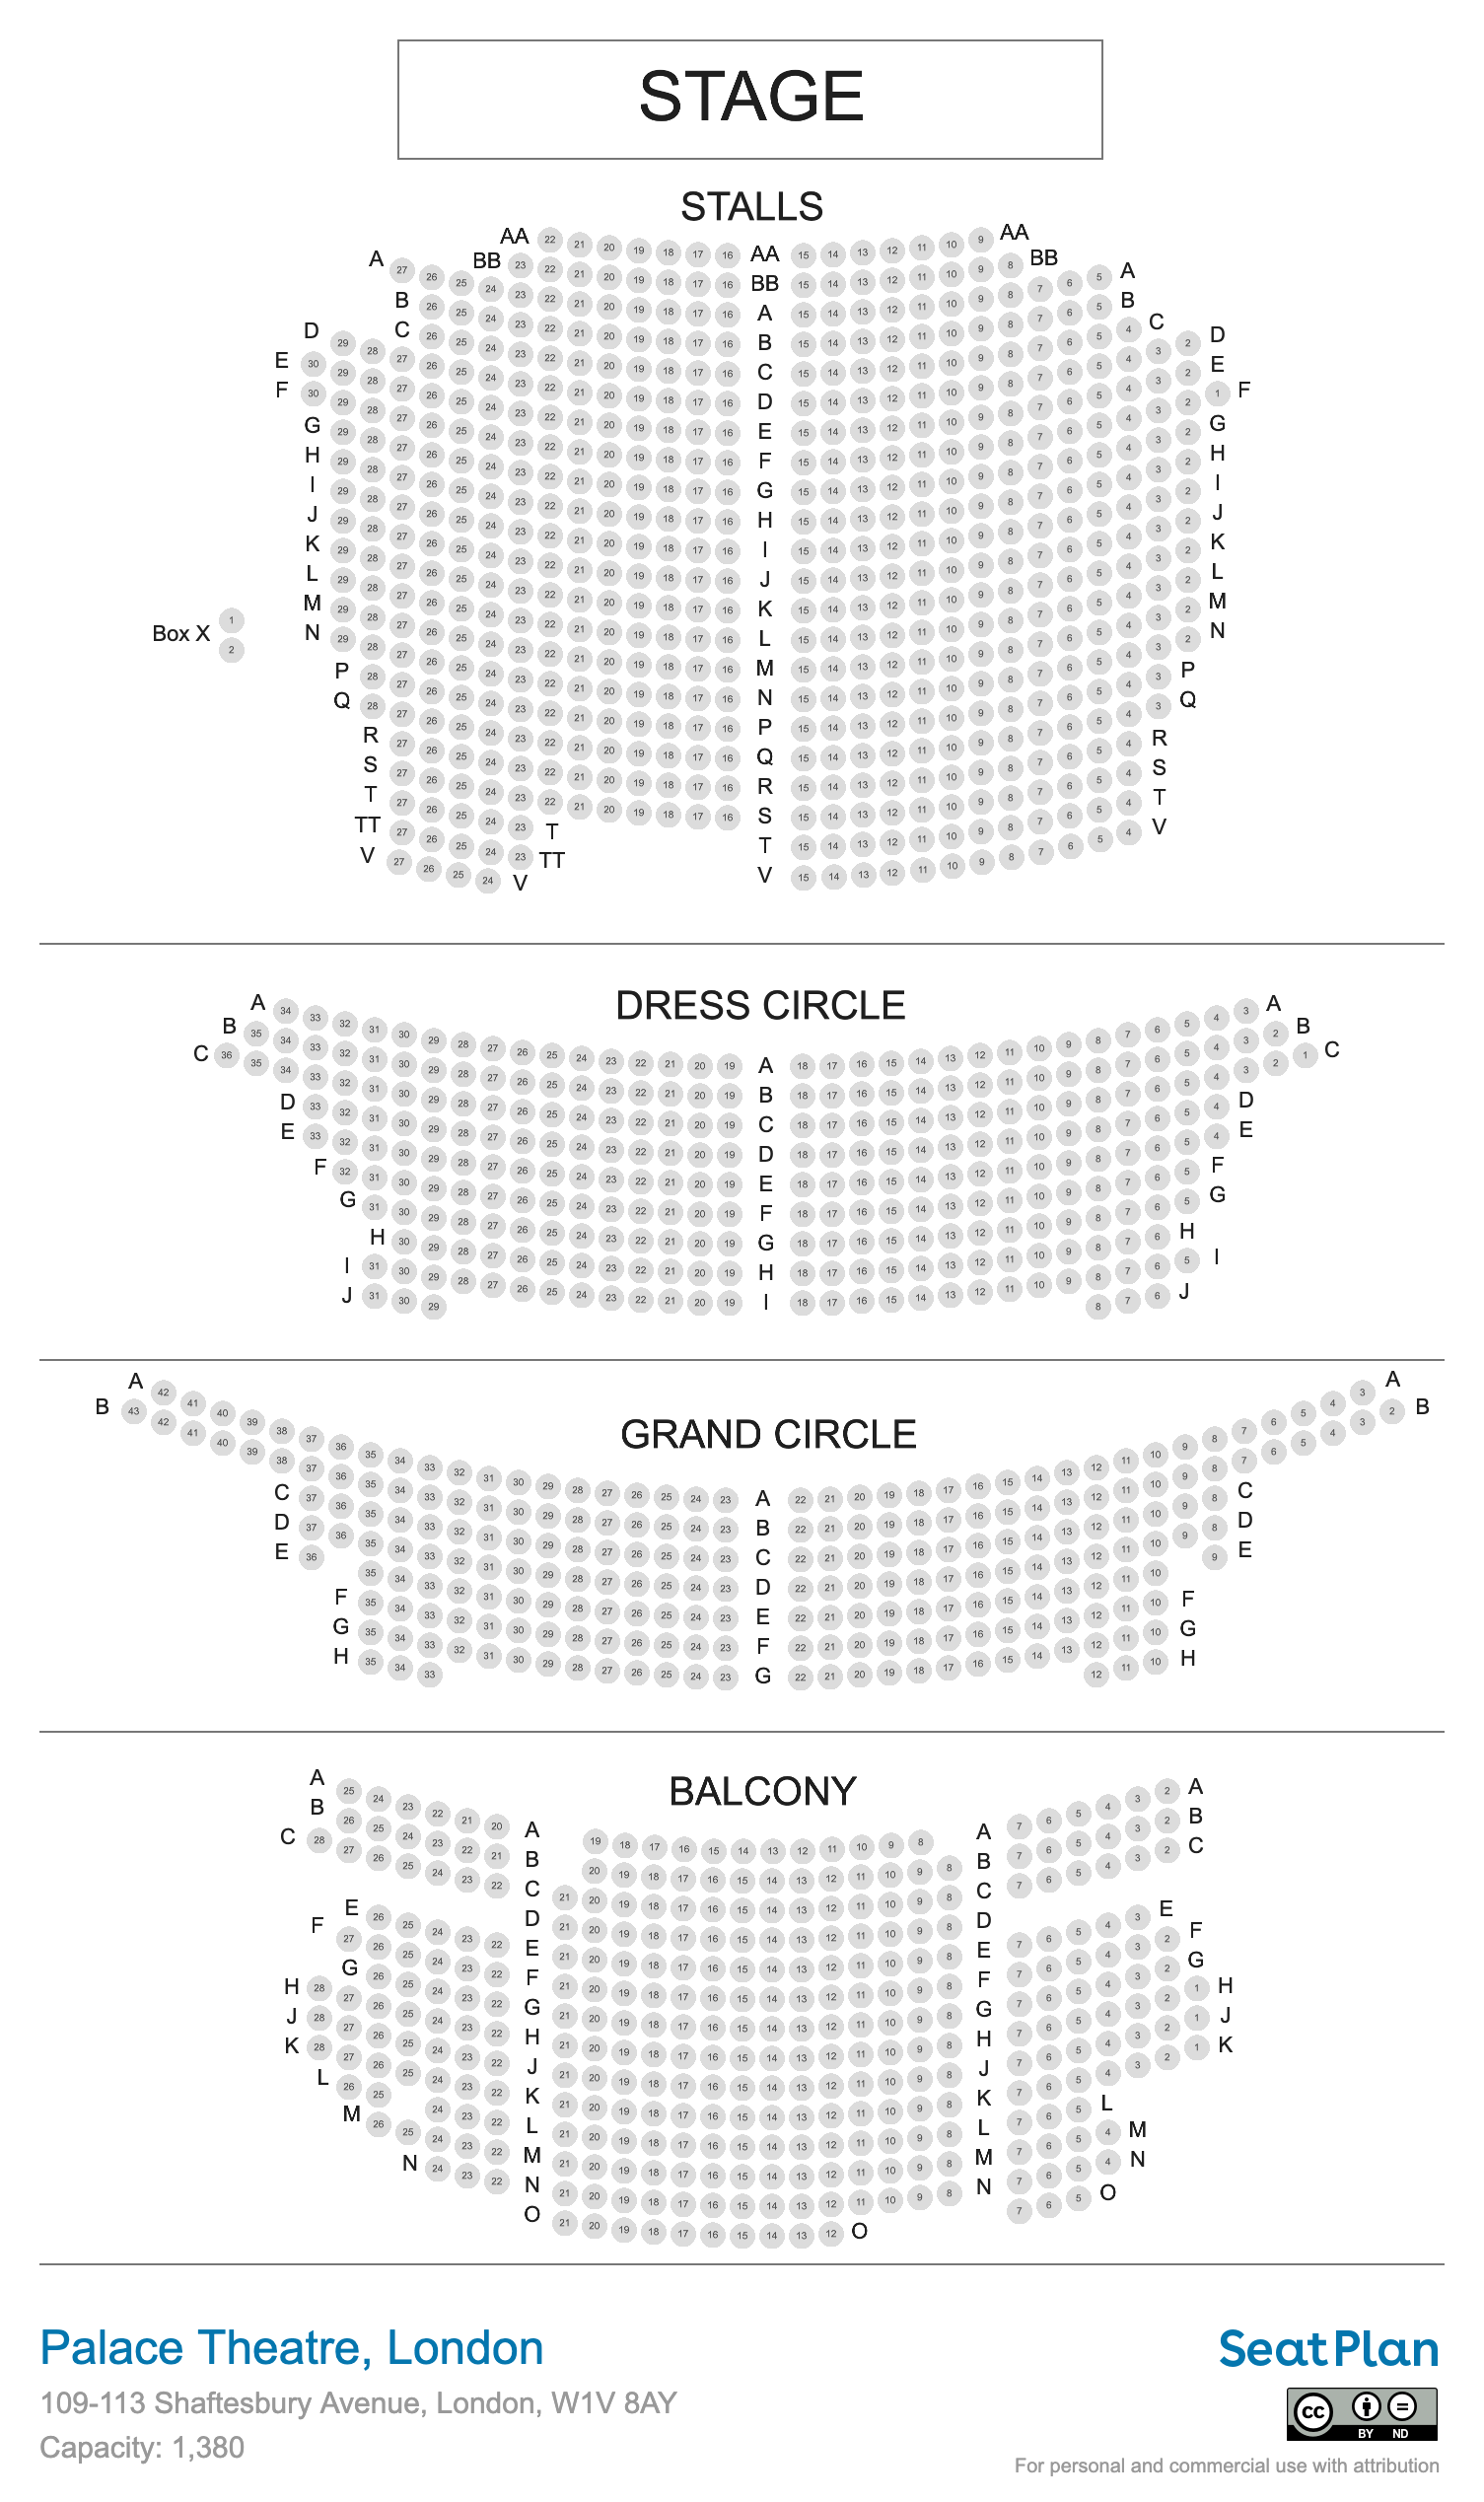 Palace Theatre seating plan